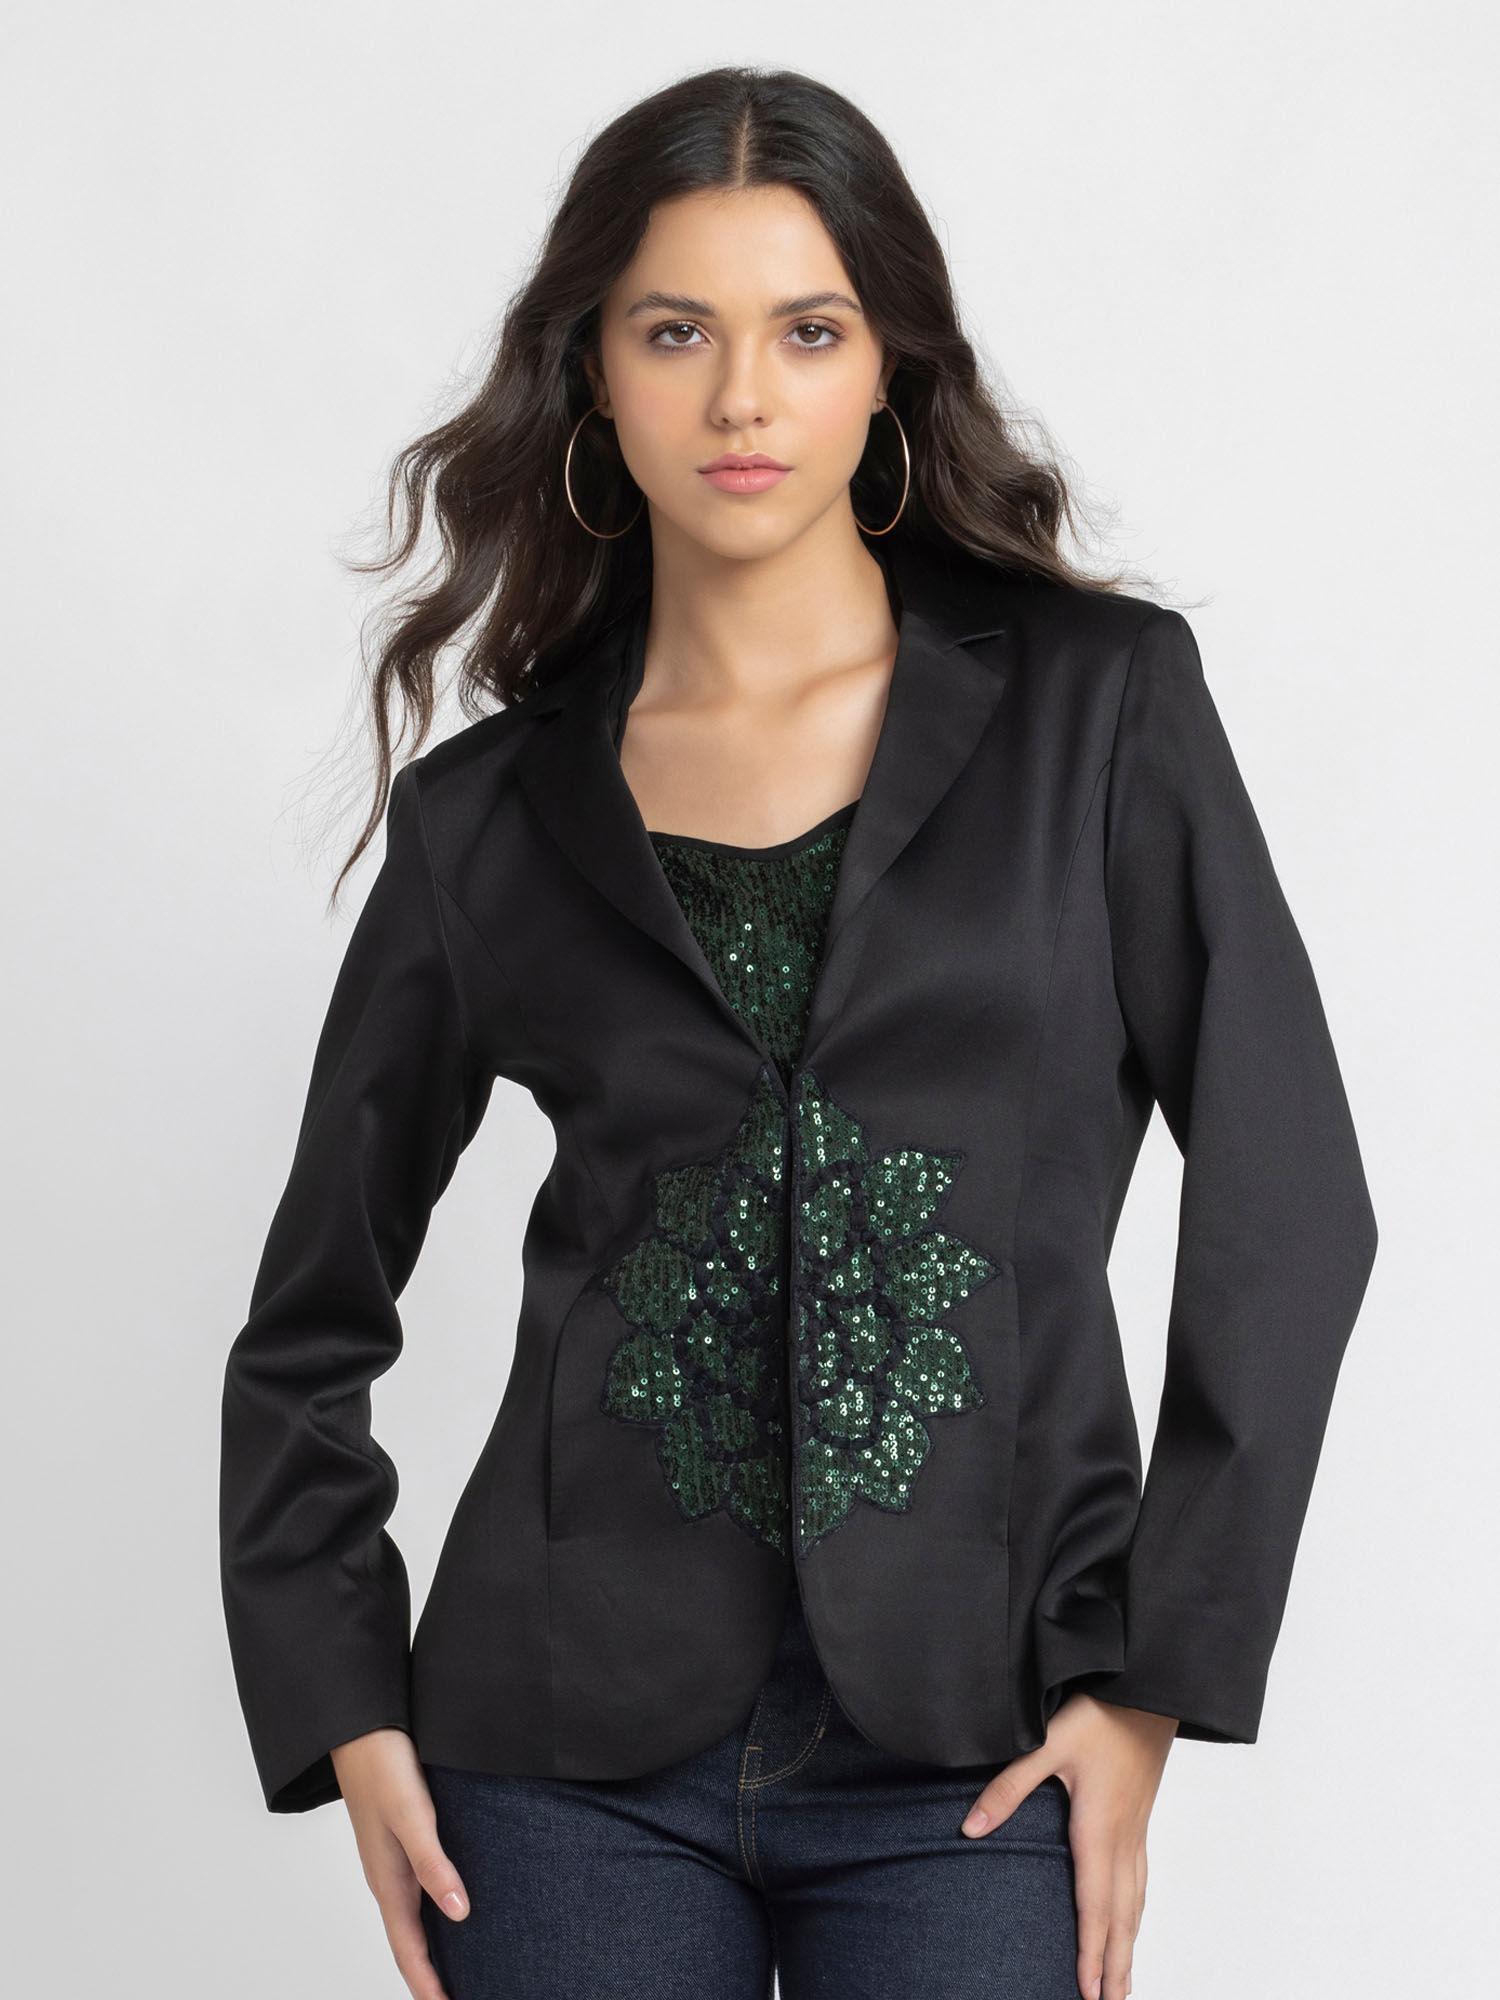 Women Lapel Collar Black Solid Full Sleeves Party Blazer